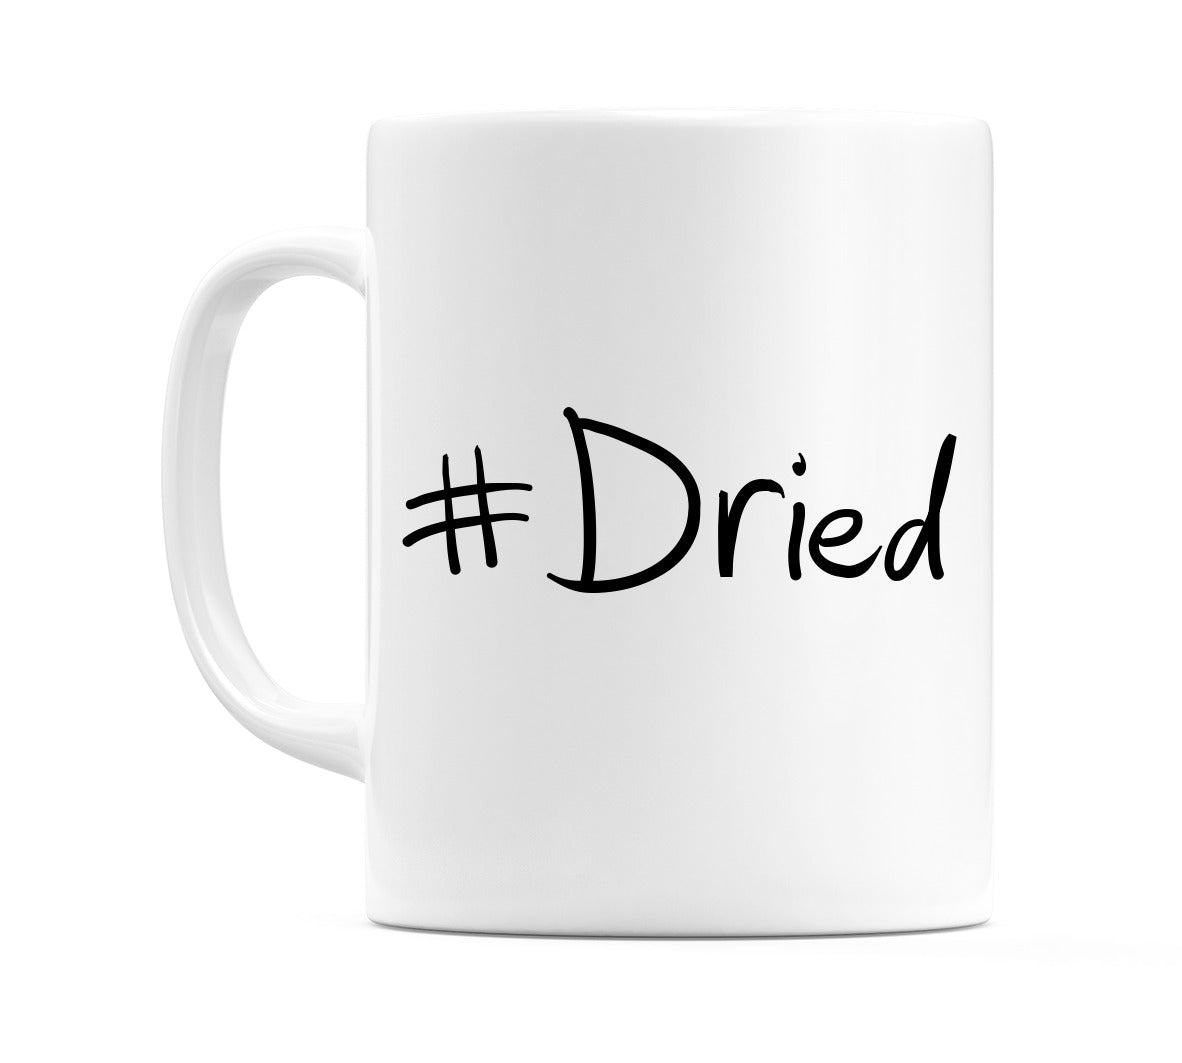 #Dried Mug